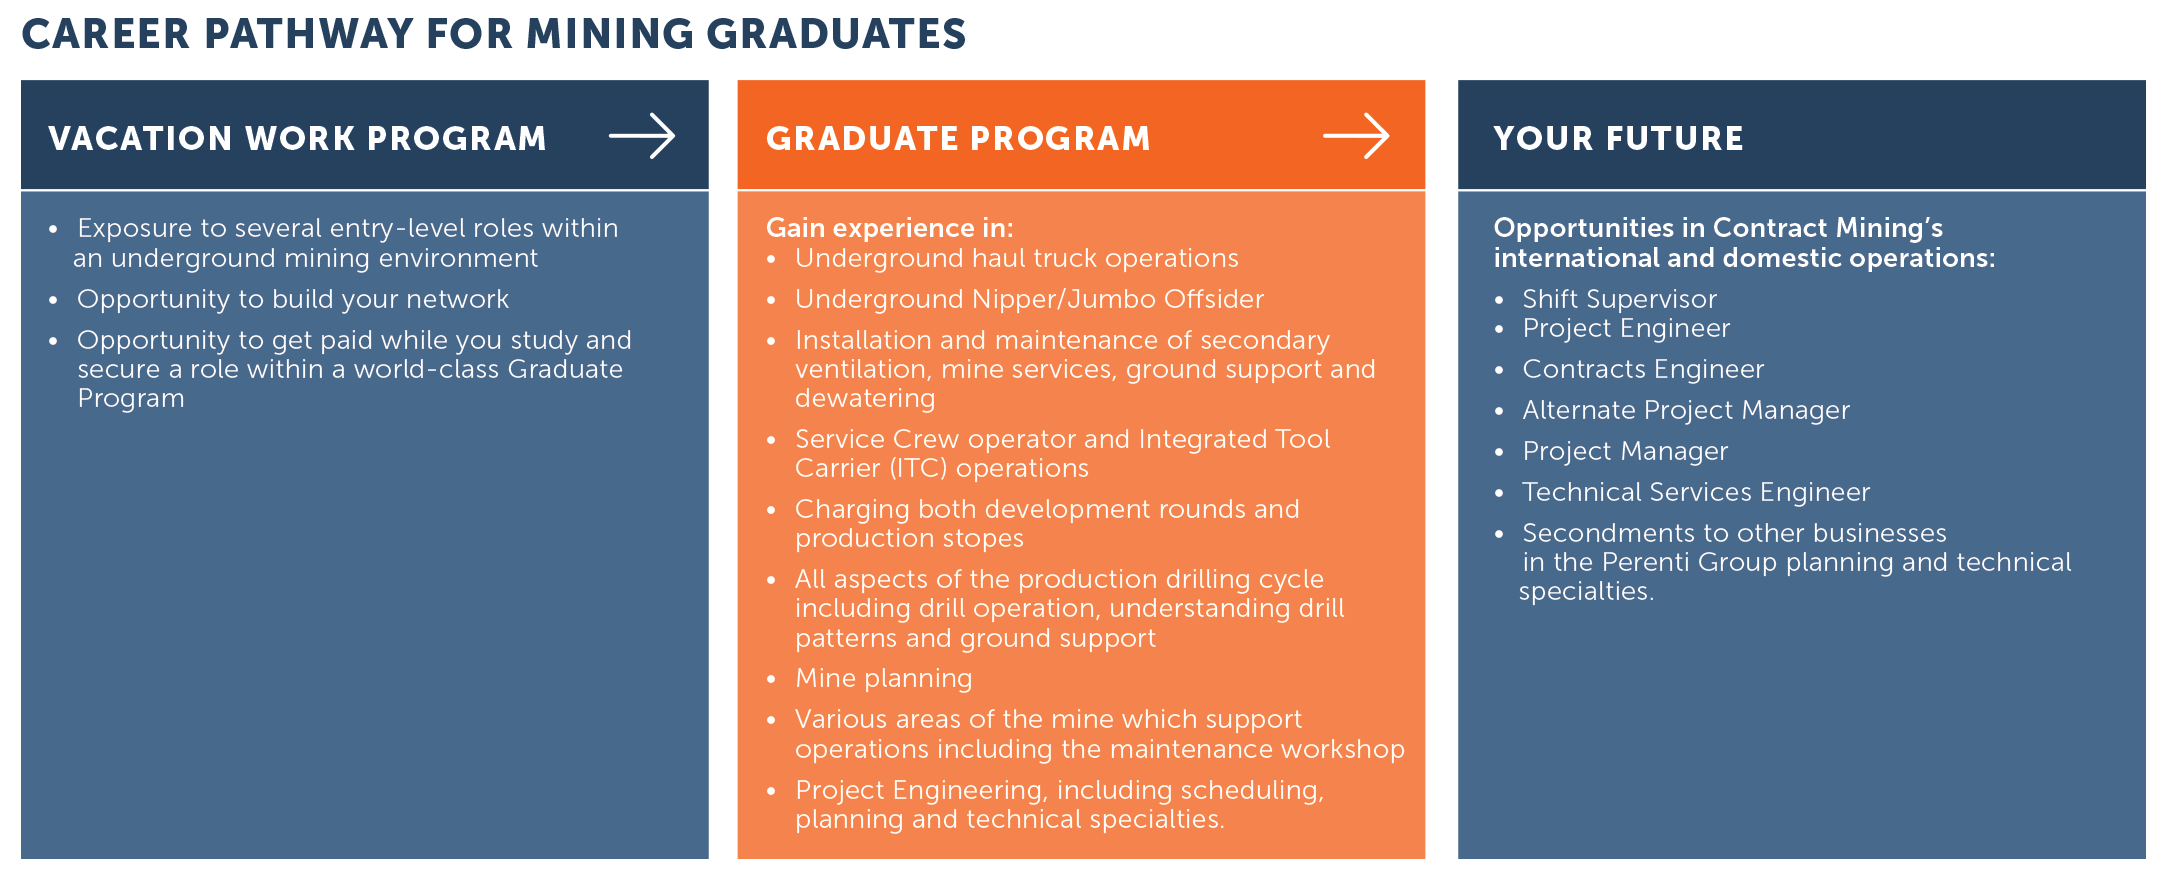 Graduate Program • Career pathway GRAPHIC 1